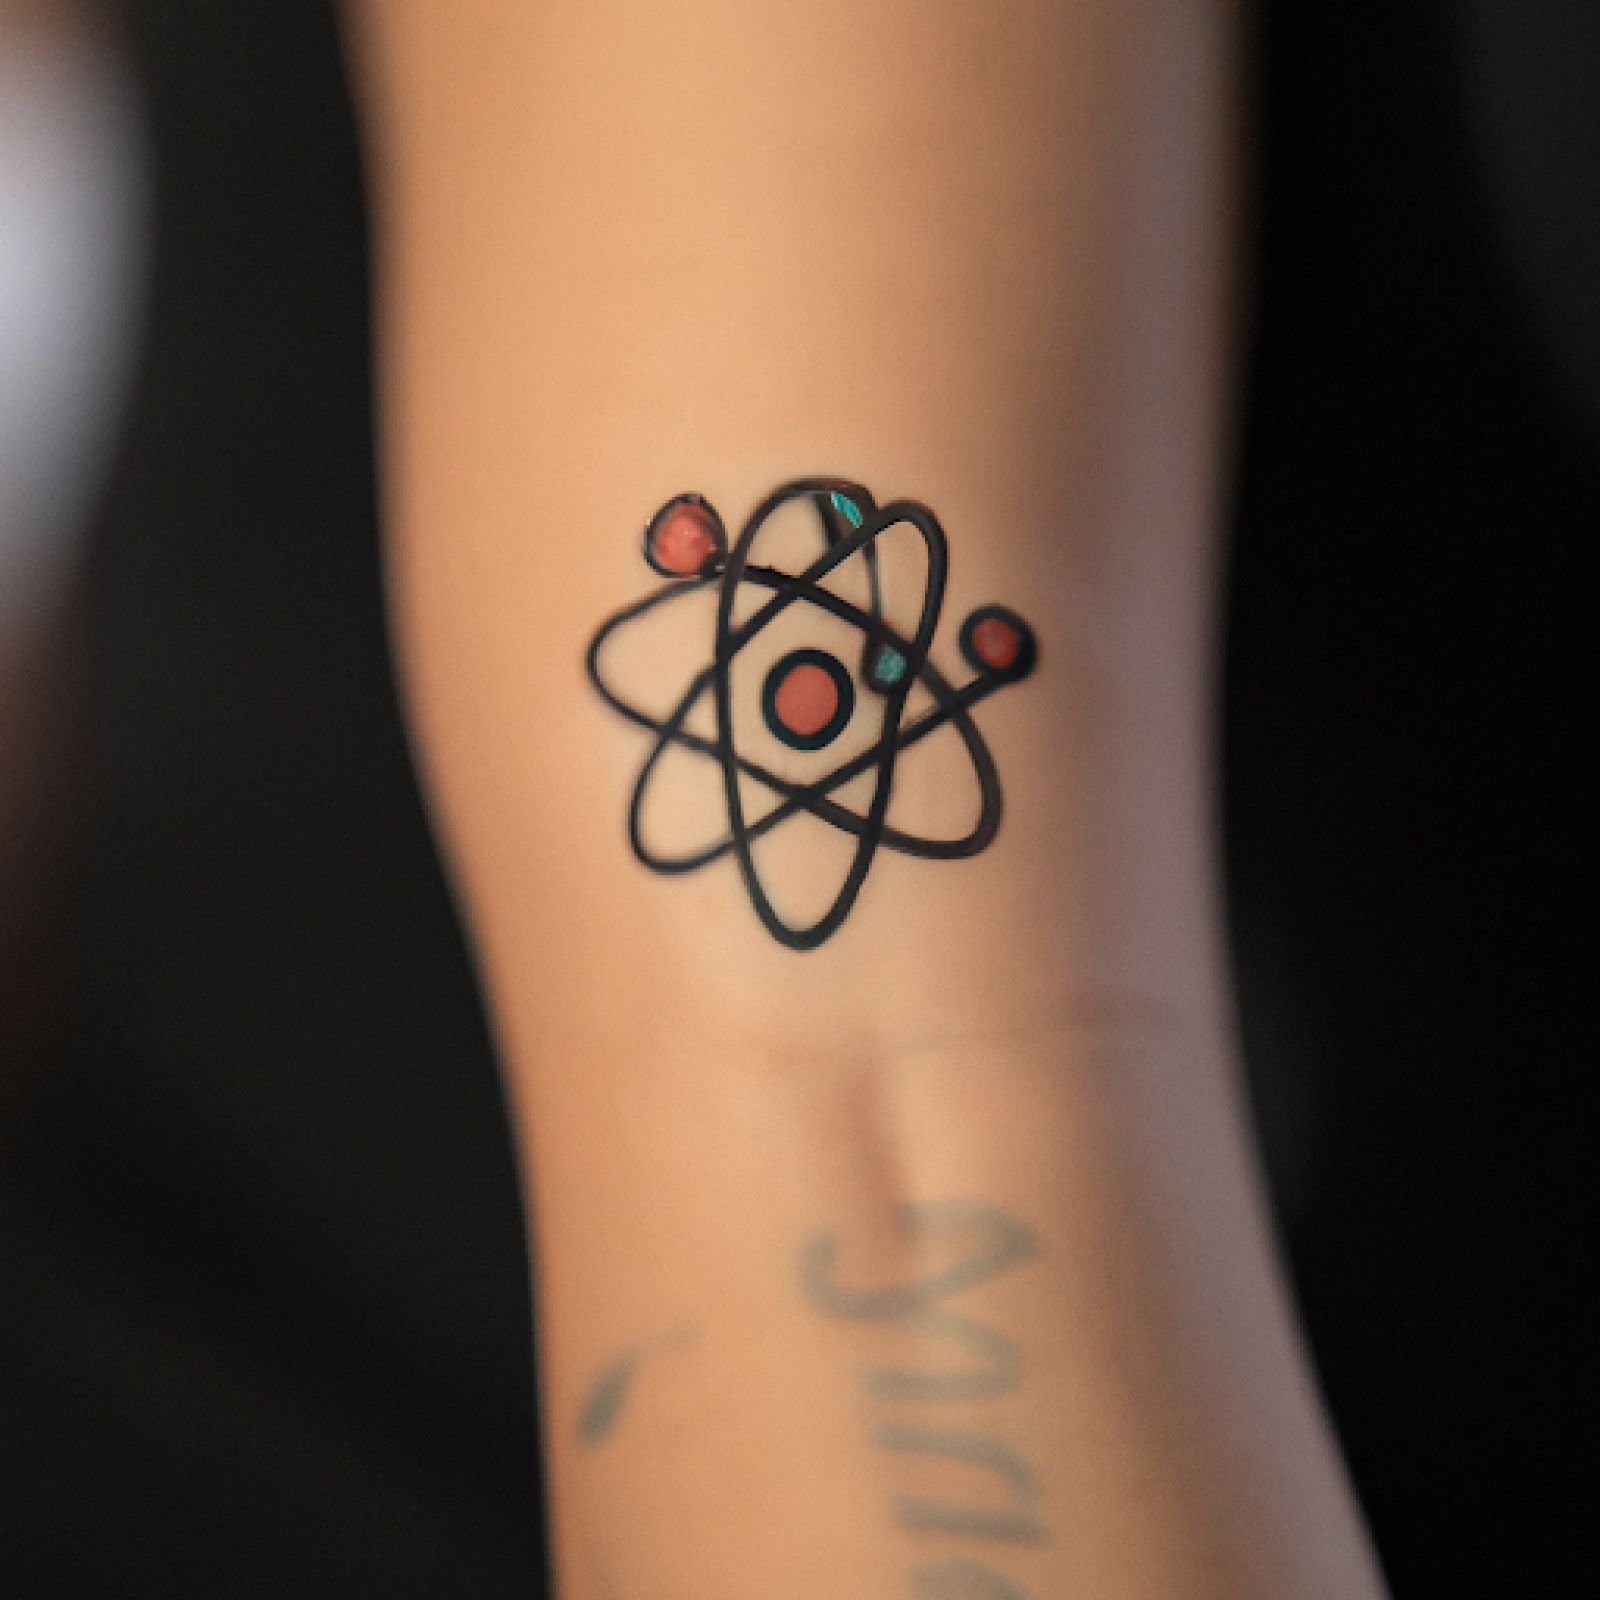 Atom tattoo on forearm for women